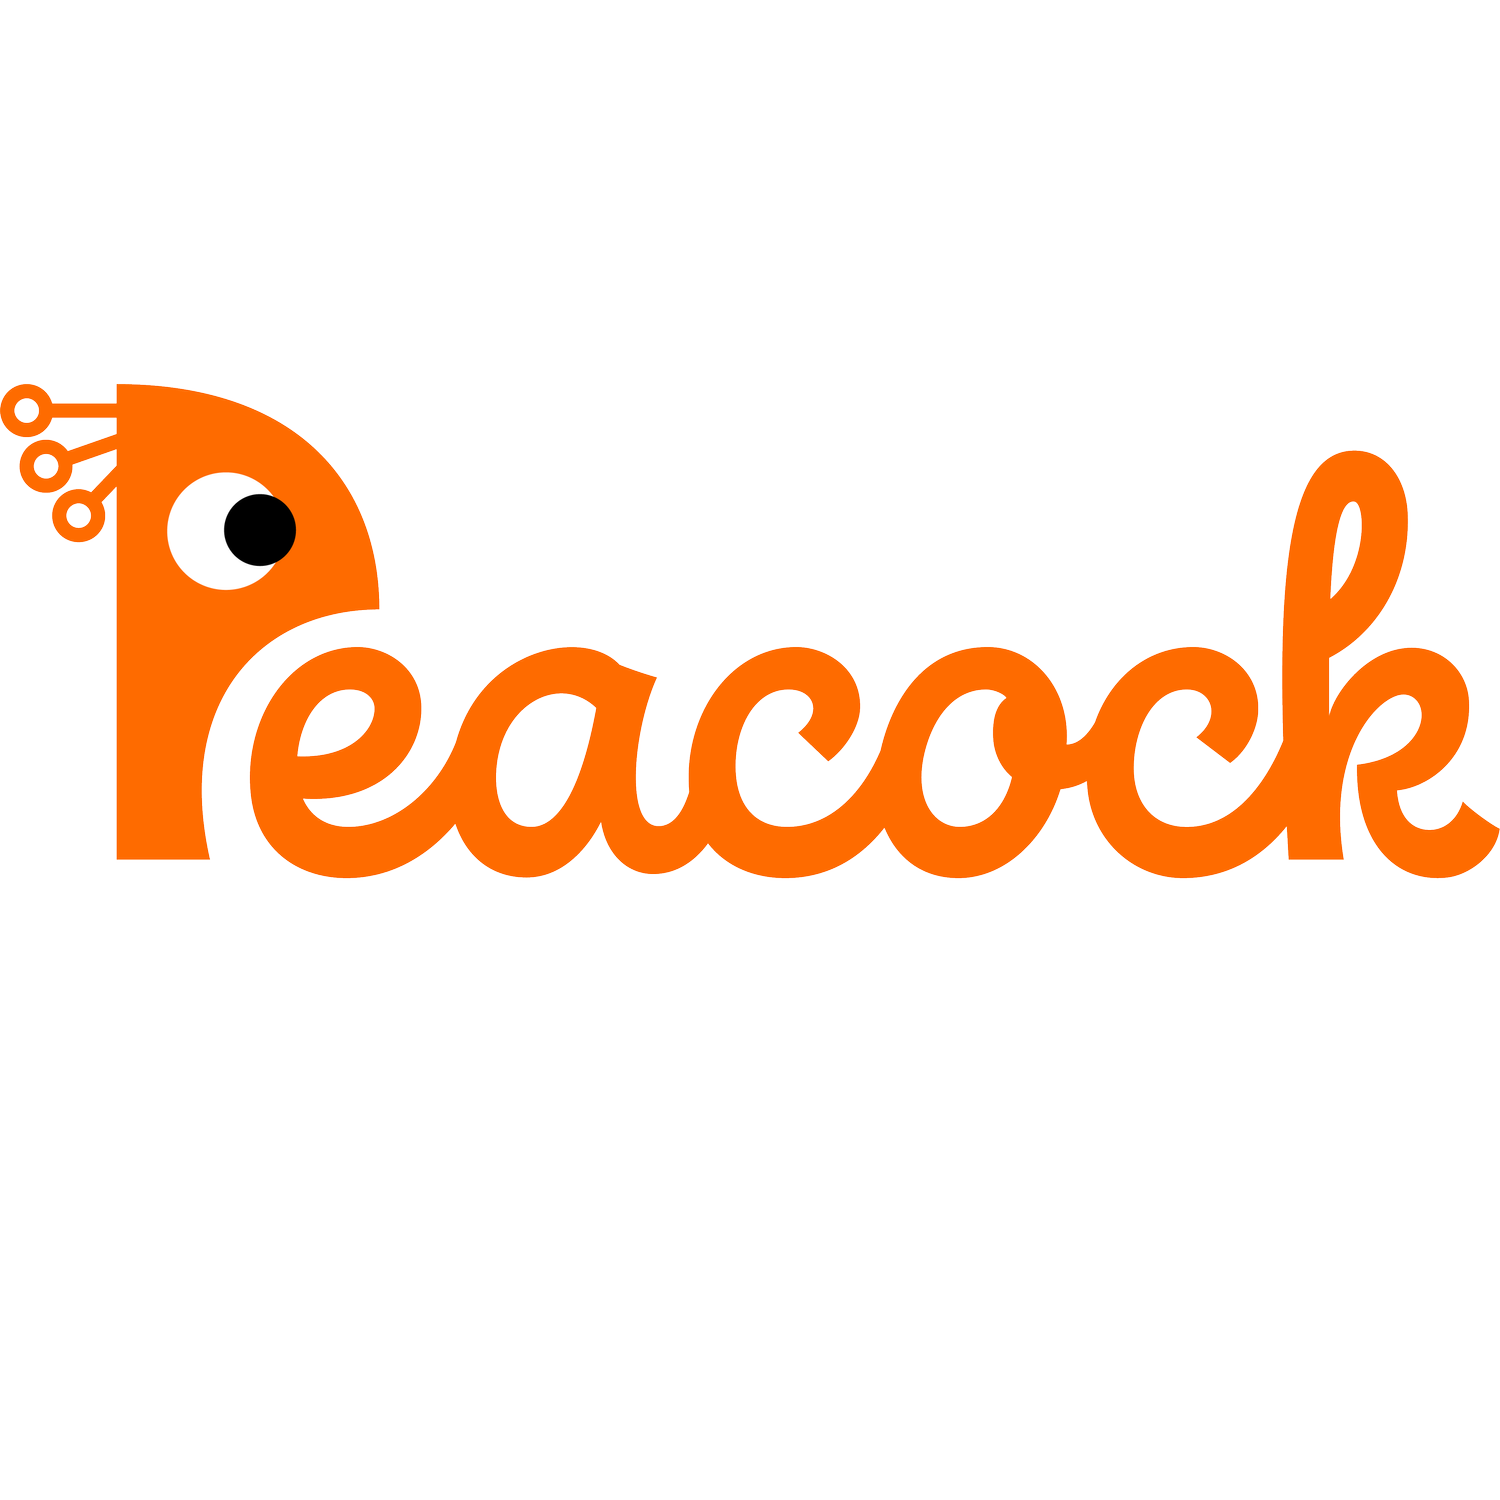 Little Peacock